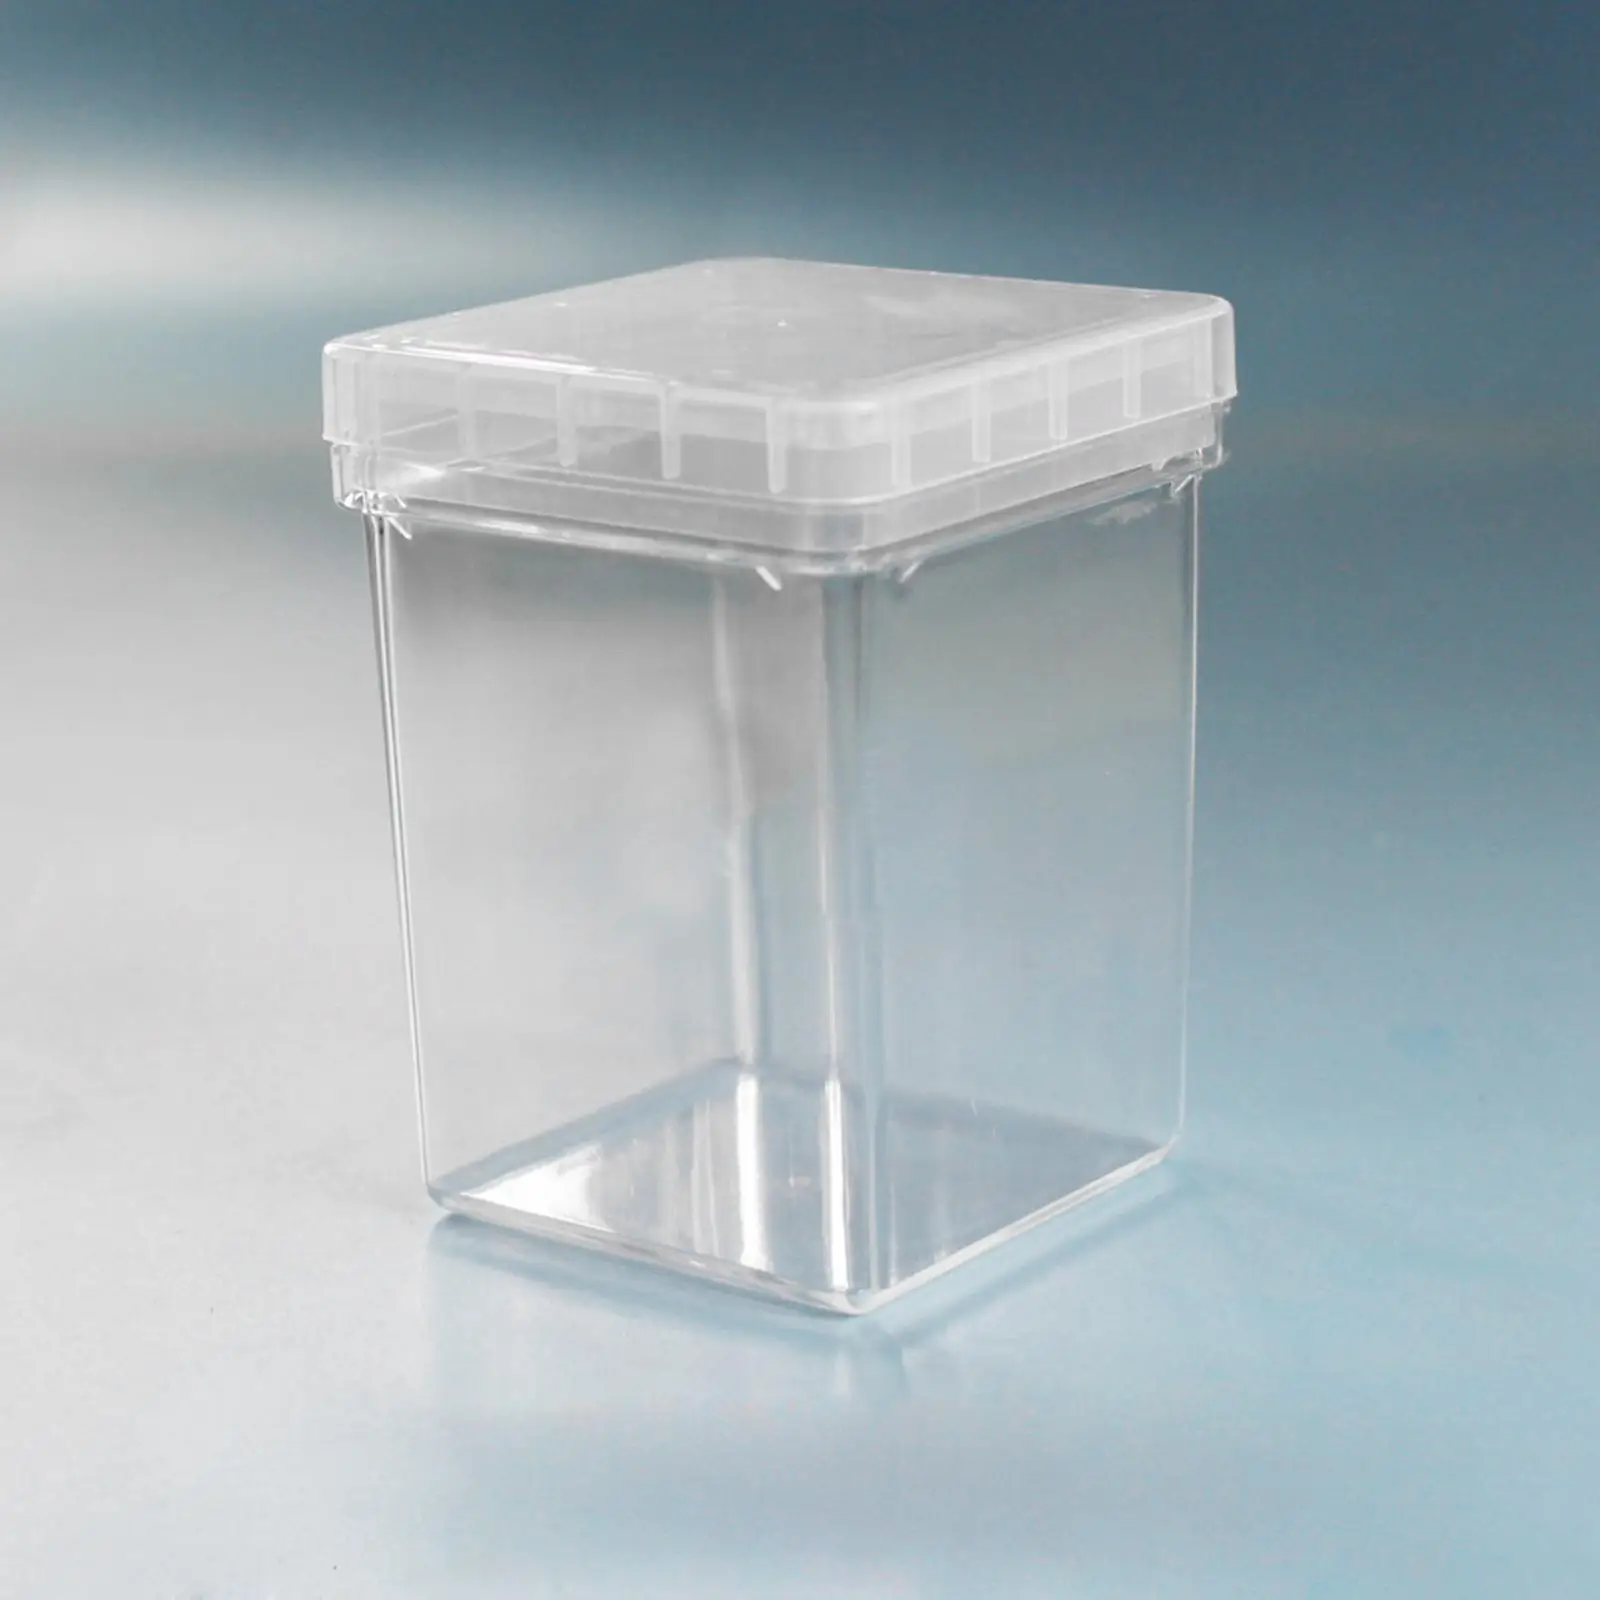 75x75x100mm PC + PP Square Tissue Culture Bottle Box High Temperature Resistant